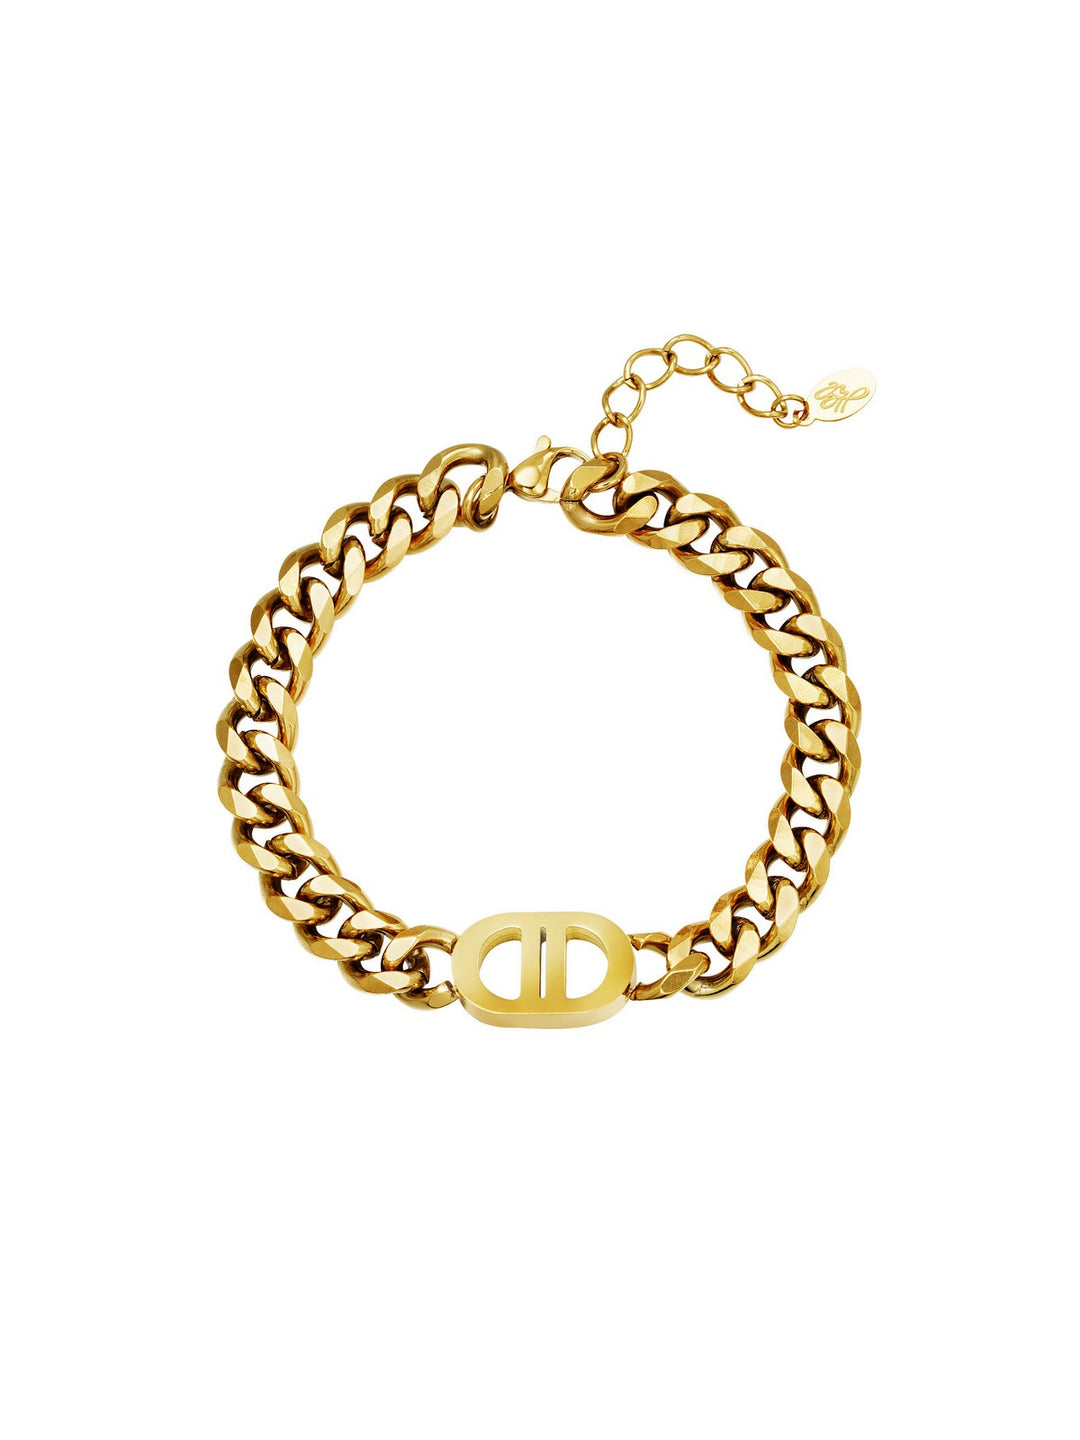 Pretty Chain Bracelet Gold